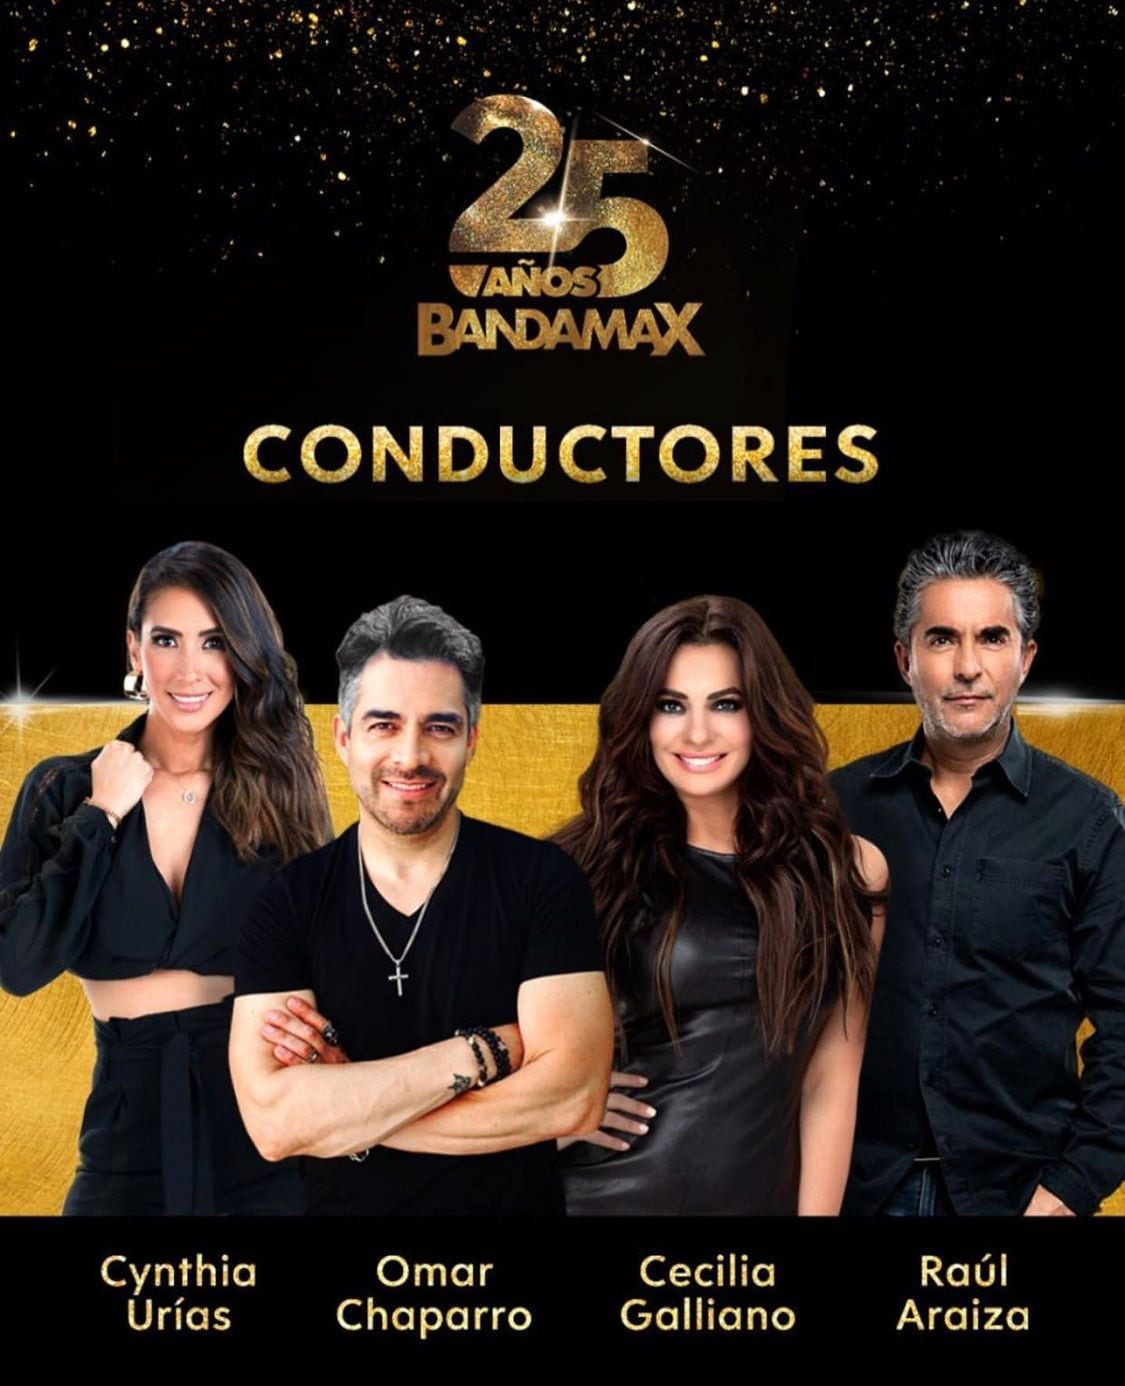 Cynthia Urías will be driving with Omar Chaparro, Cecilia Galliano and Raúl Araiza (Photo: Instagram / @ cynthiaurias)